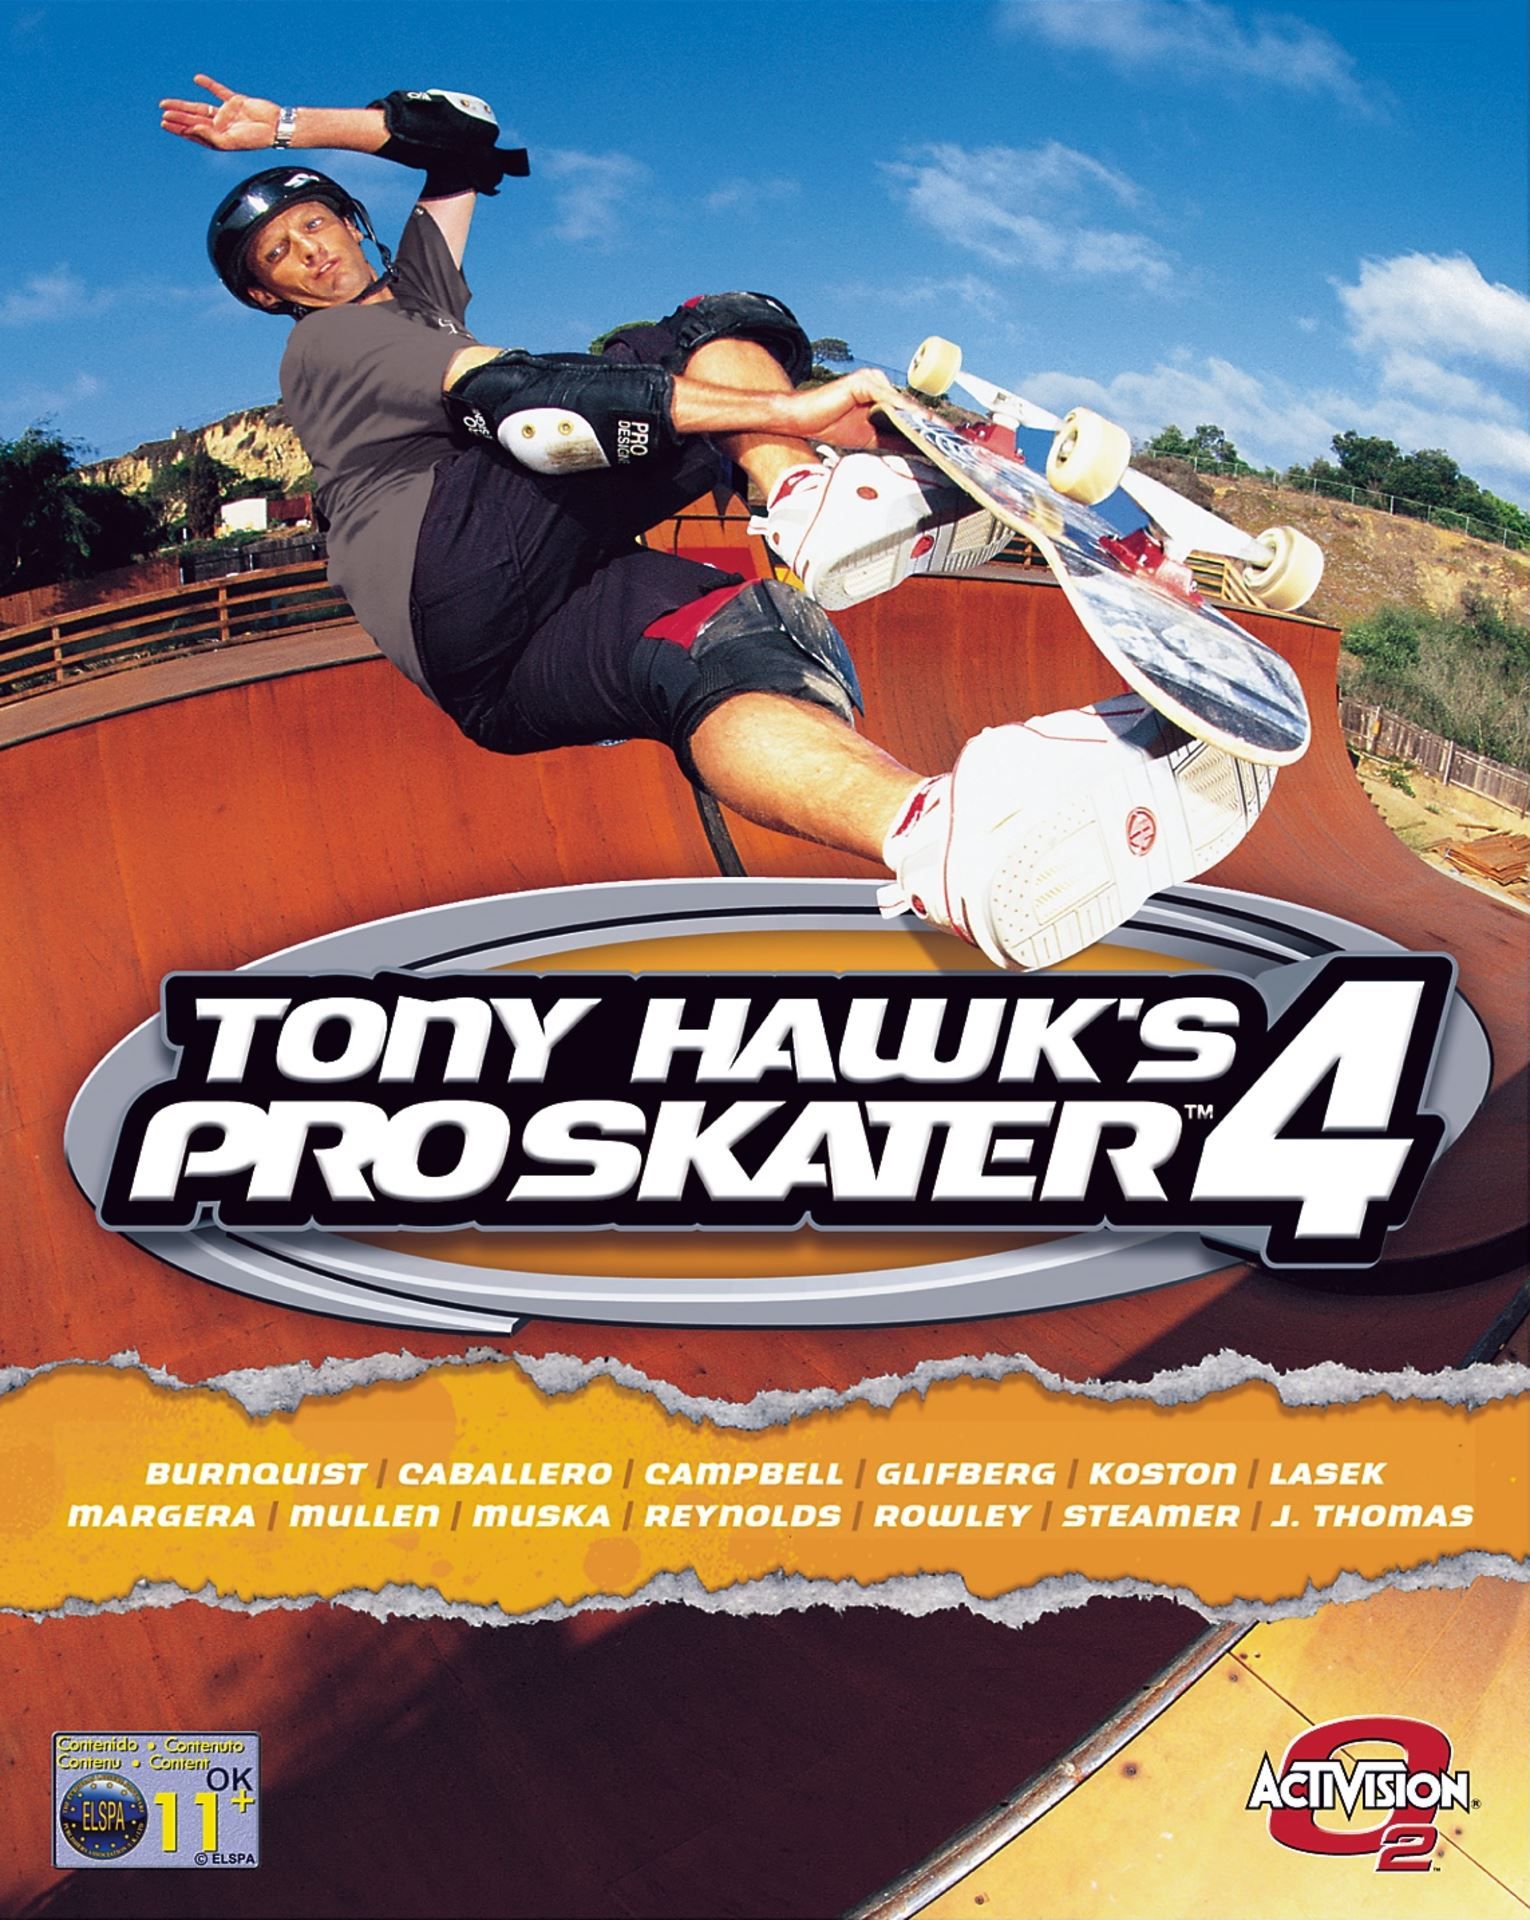 Tony Hawk's Pro Skater 4 Free Download Torrent